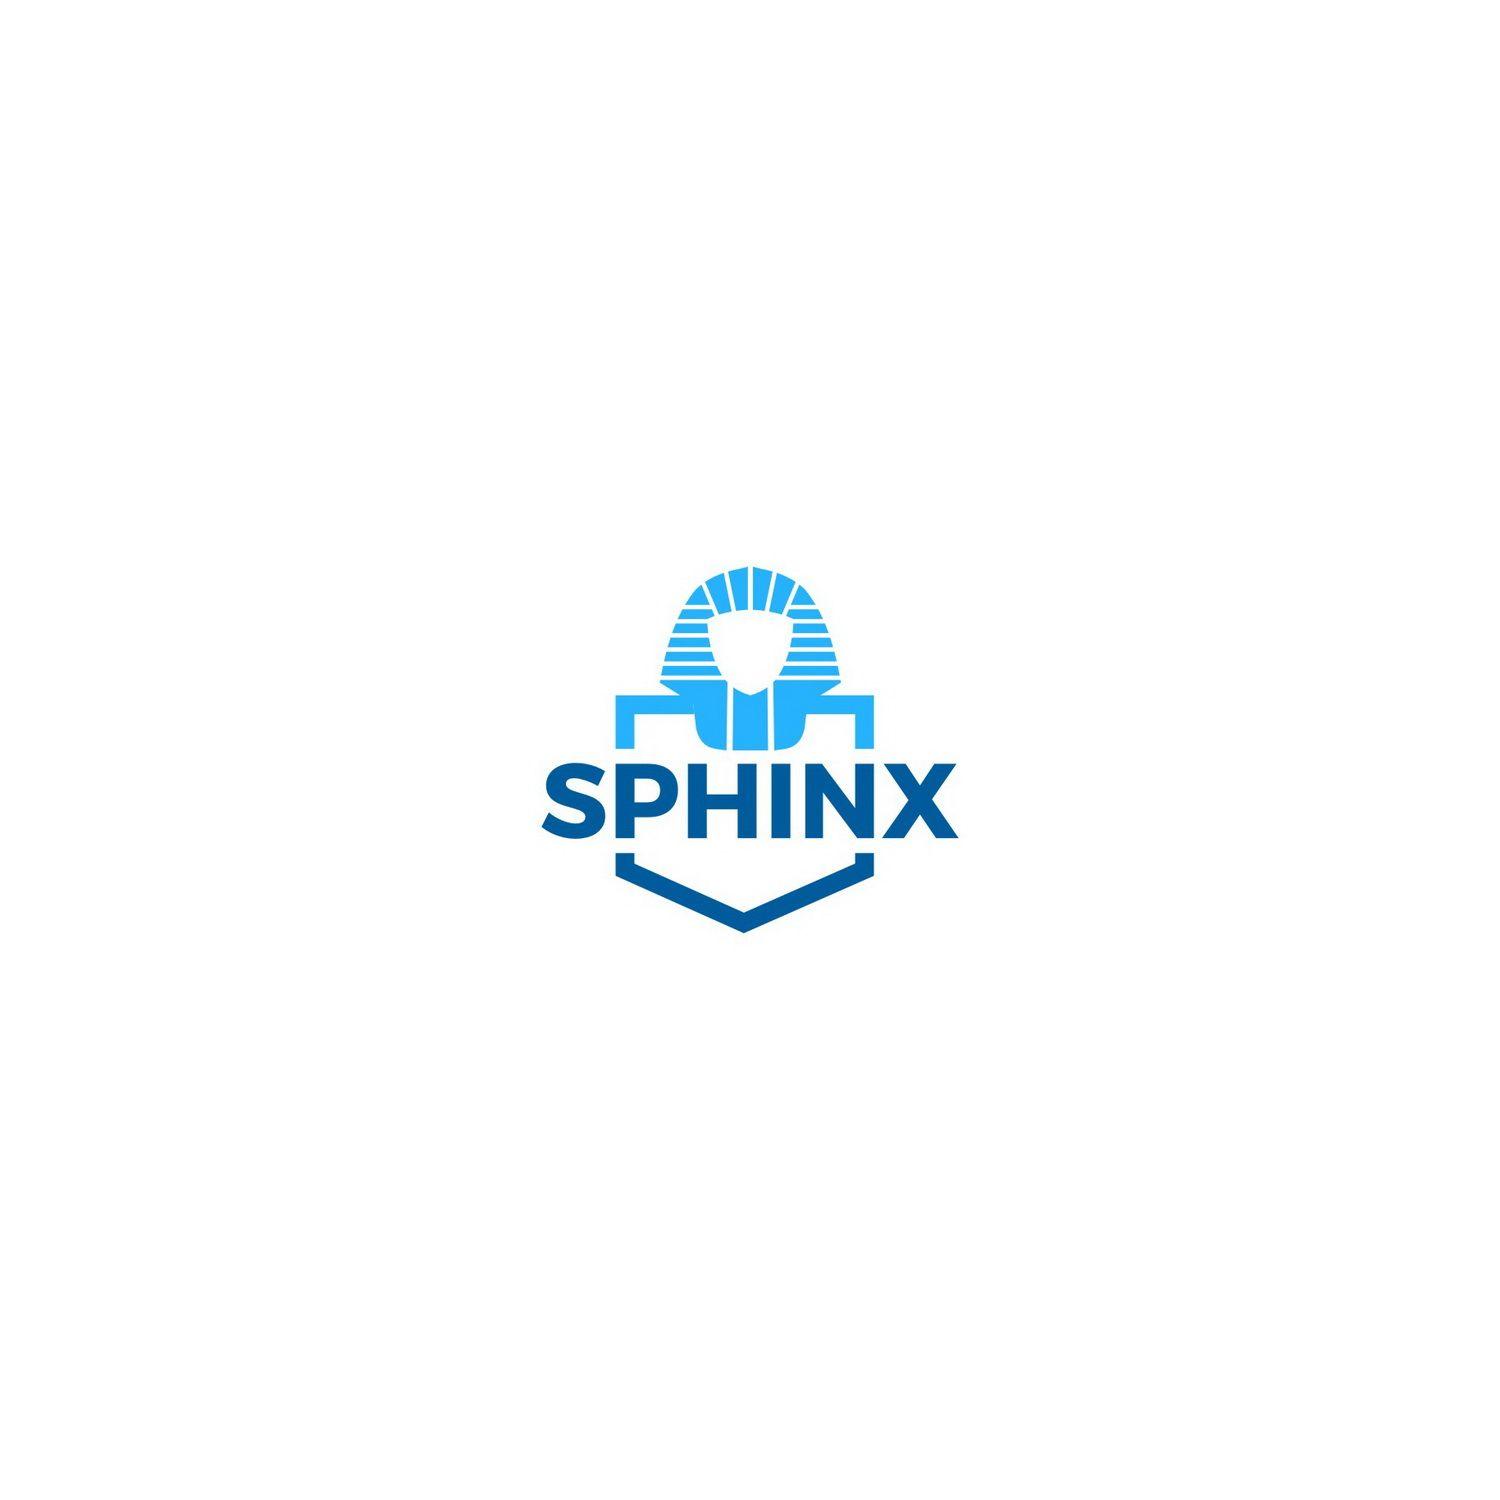 Sphinx Logo - Logo Design for SPHINX by trisnant. Design